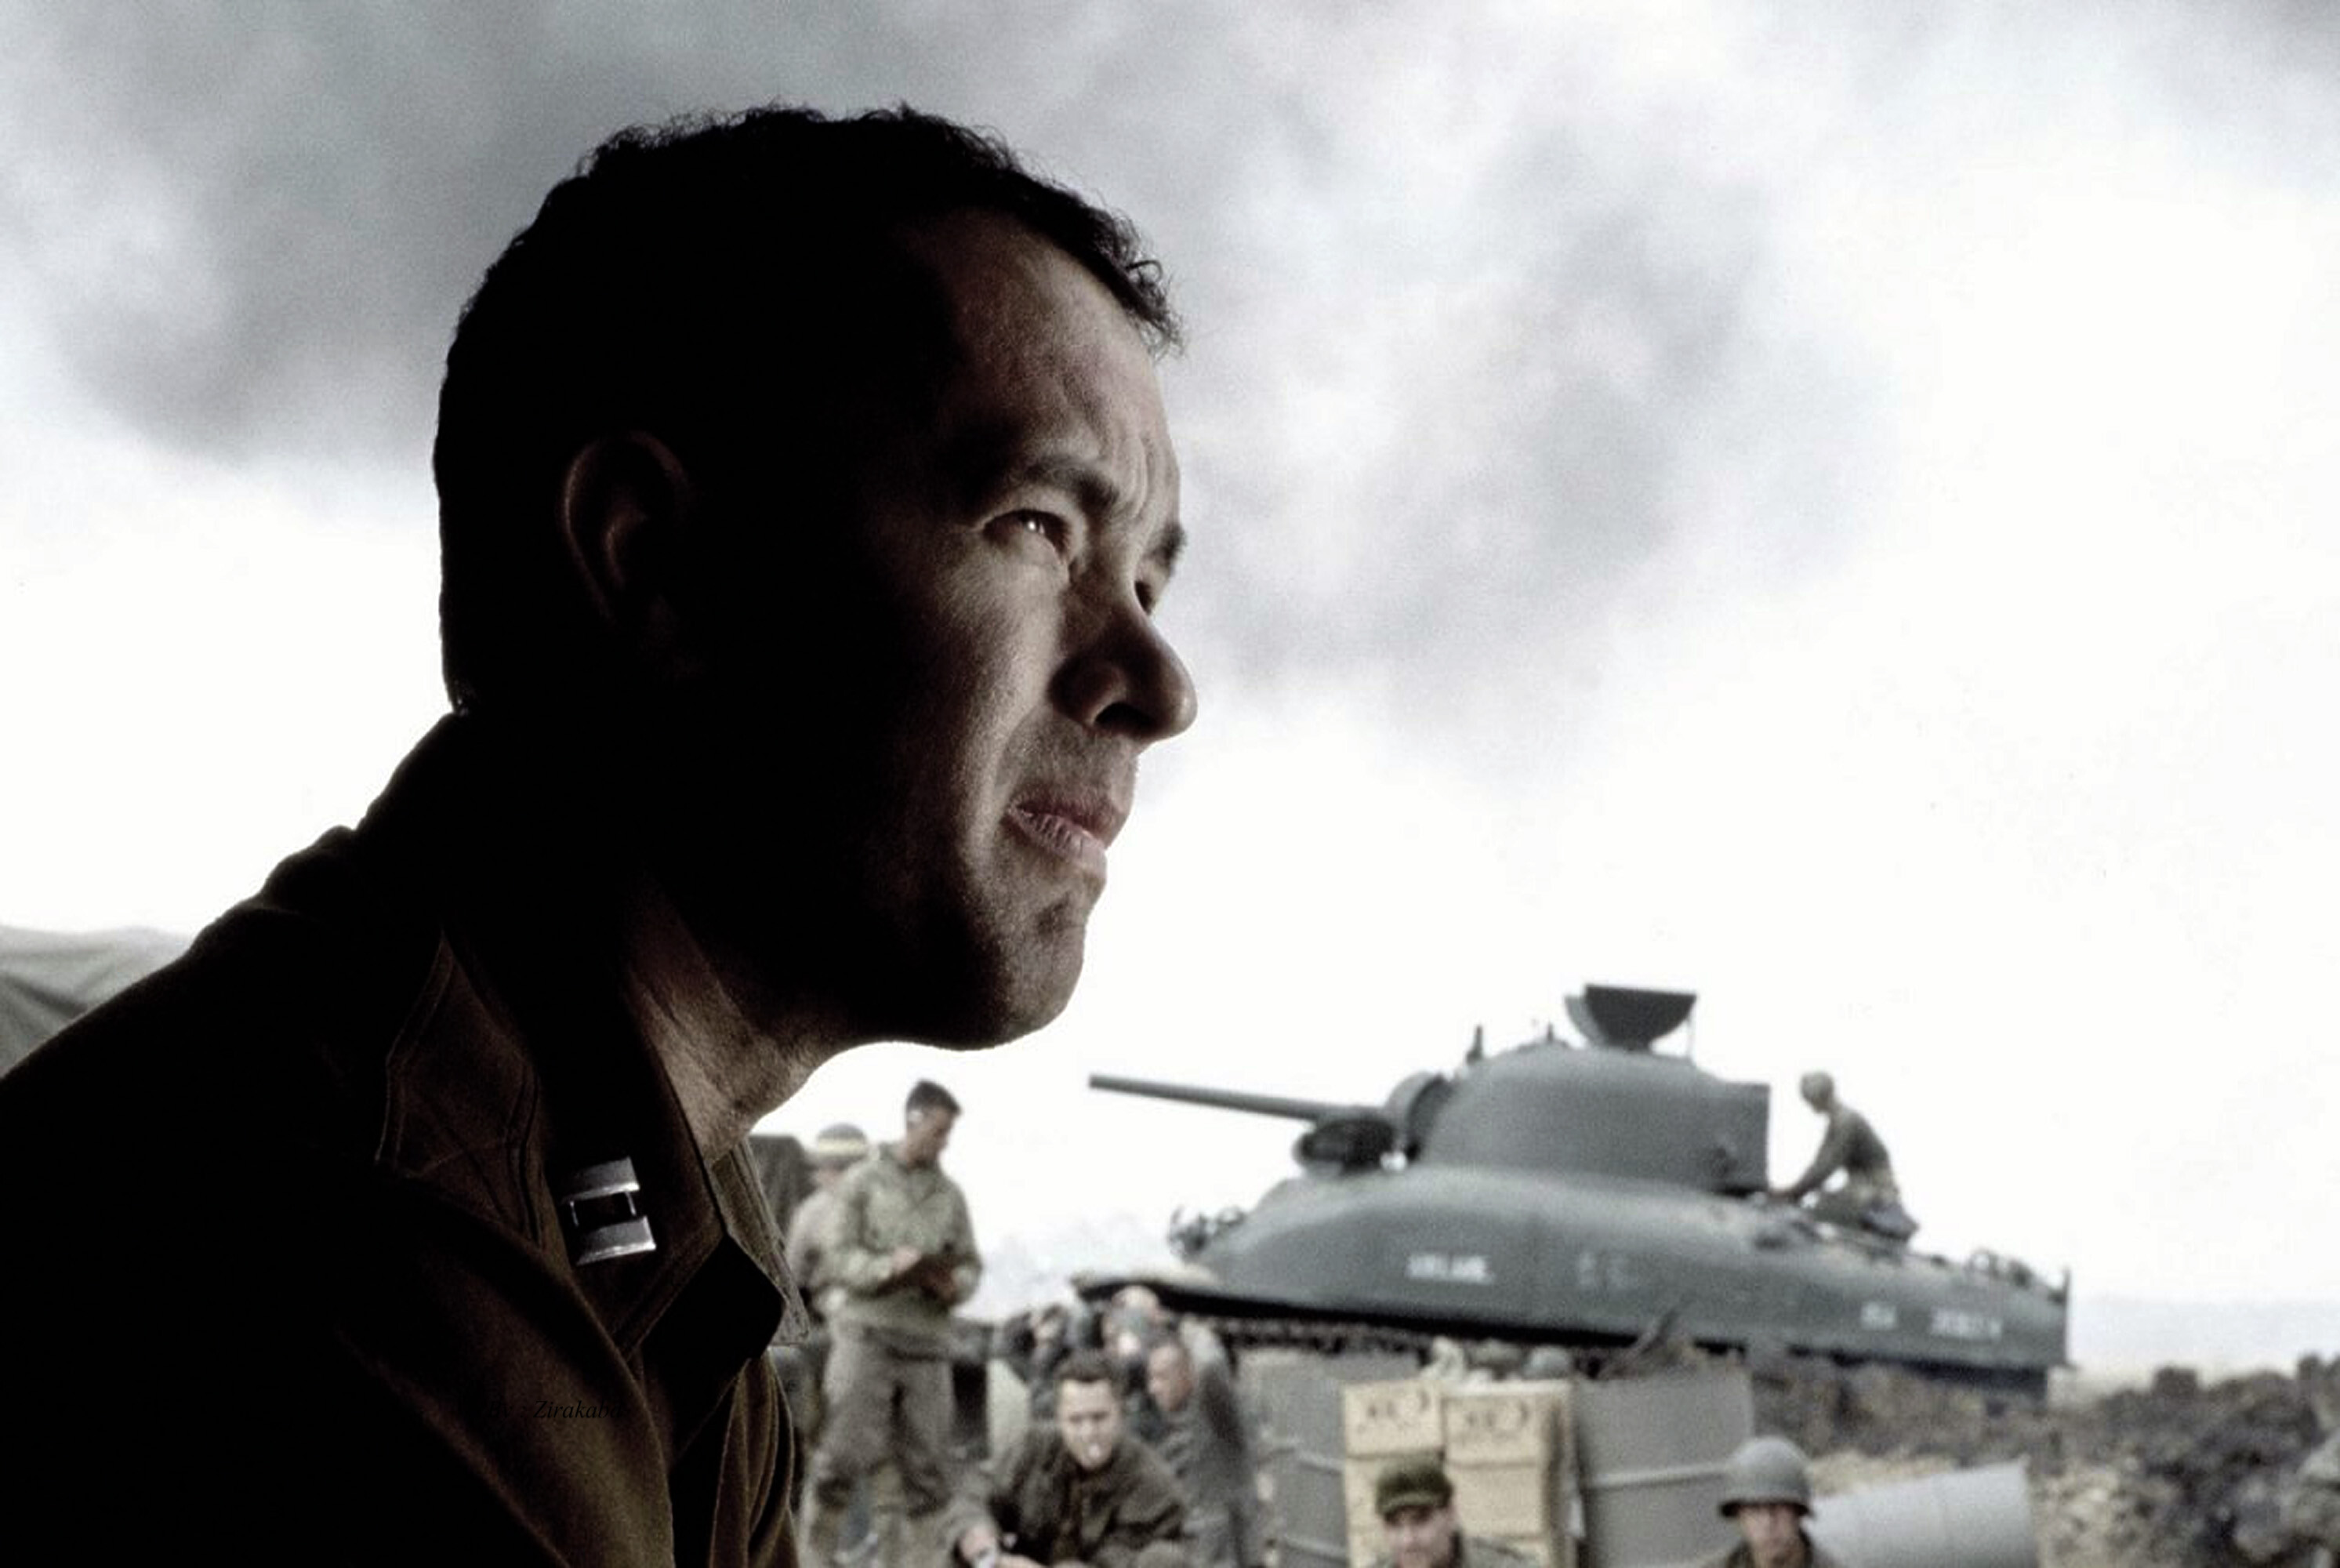 Saving Private Ryan: Tom Hanks as Captain John H. Miller, A 1998 American epic war film. 2990x2000 HD Wallpaper.